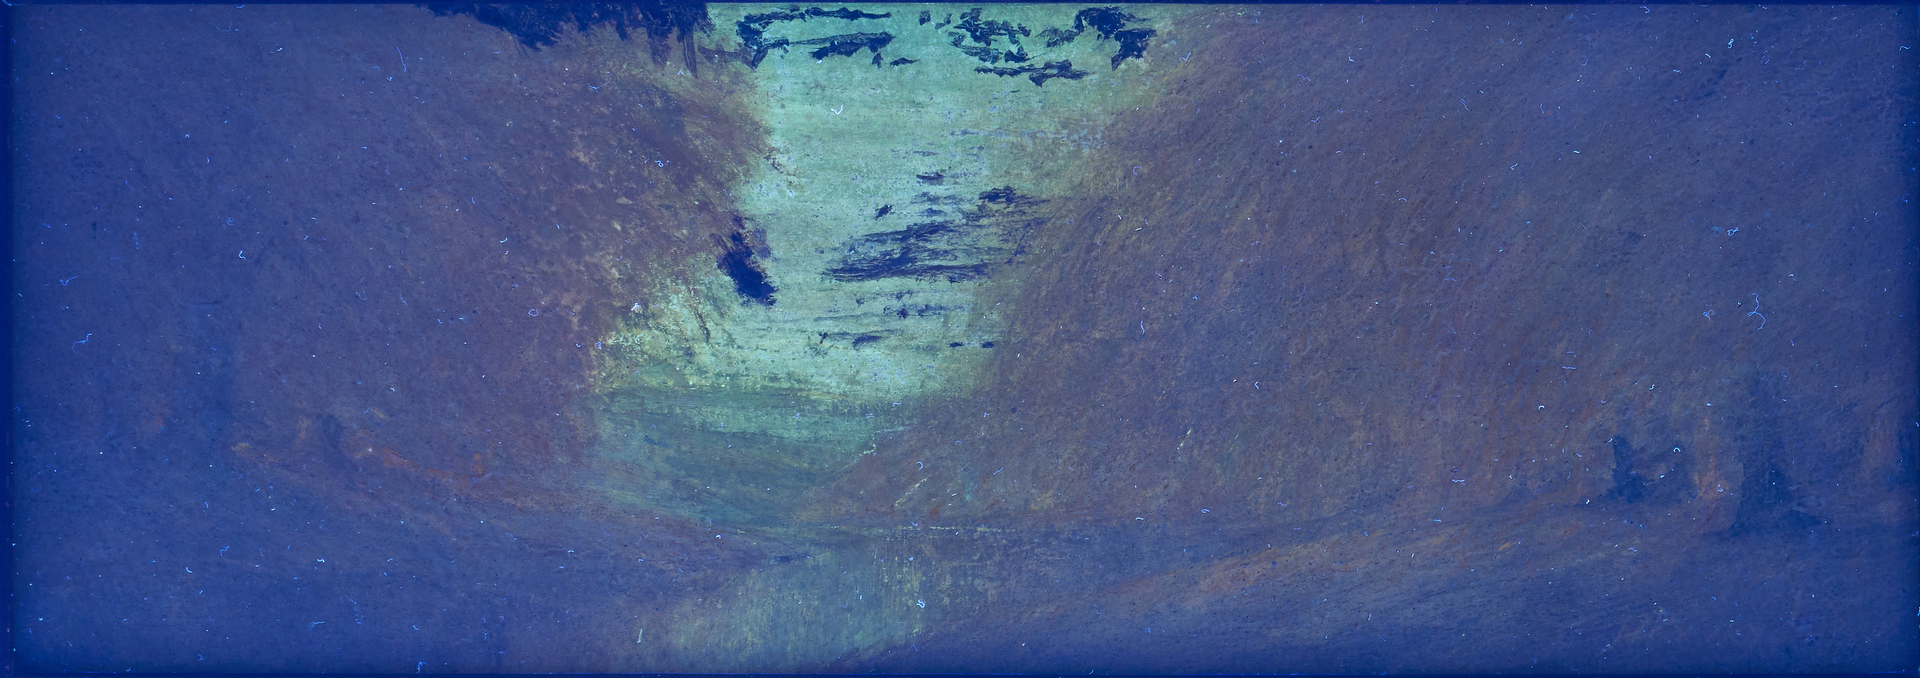 Lot 147: Small Harvey Joiner Oil on Board Fall Landscape